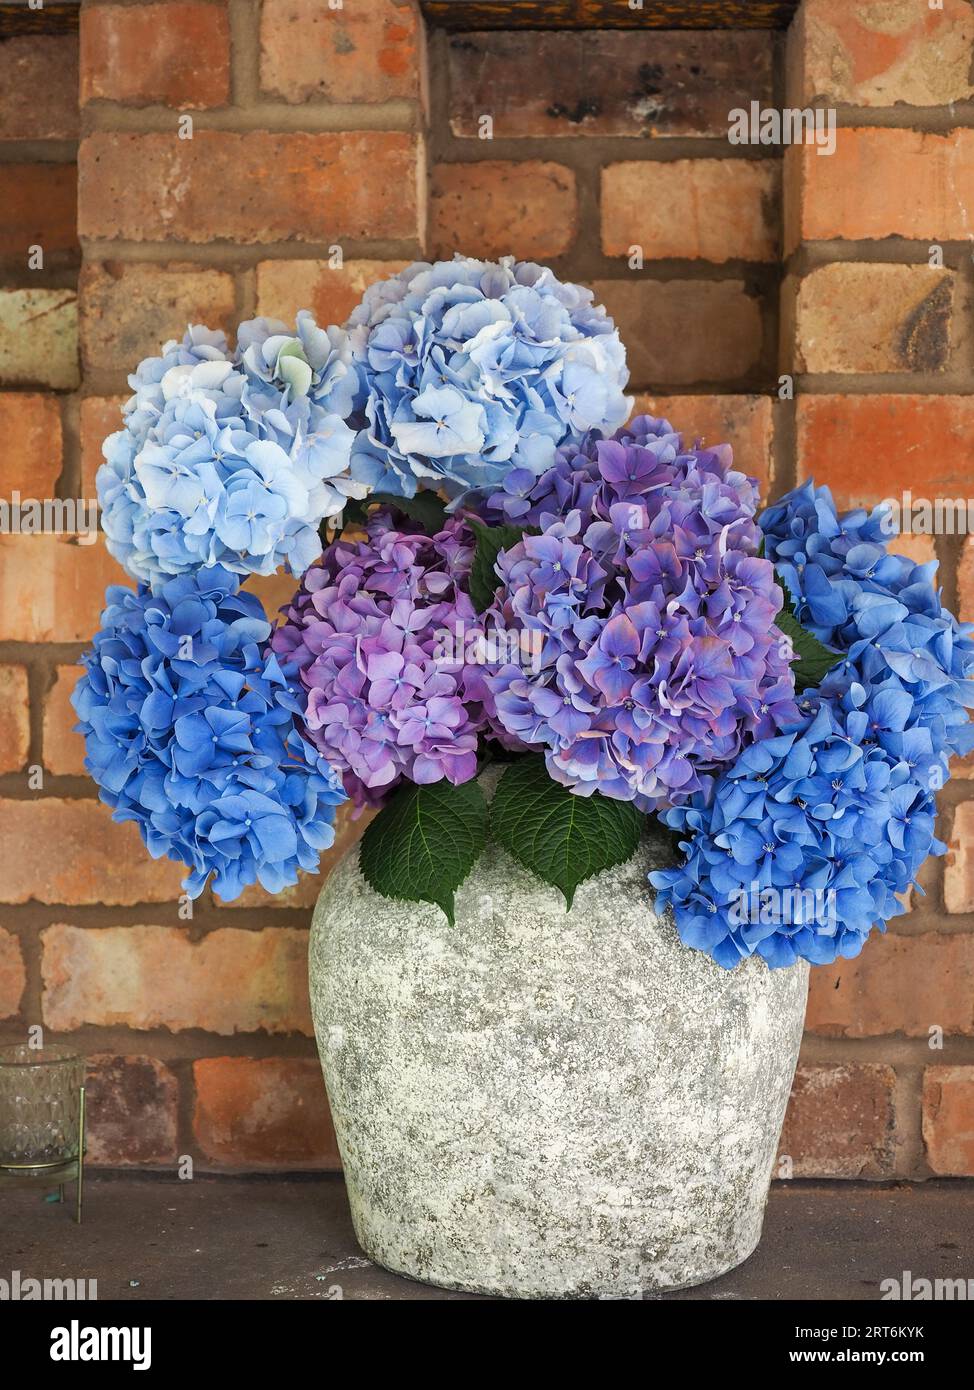 Concrete vase of seasonal blue and purple mophead hydrangea macrophylla cut flowers against a vintage brick wall background Stock Photo